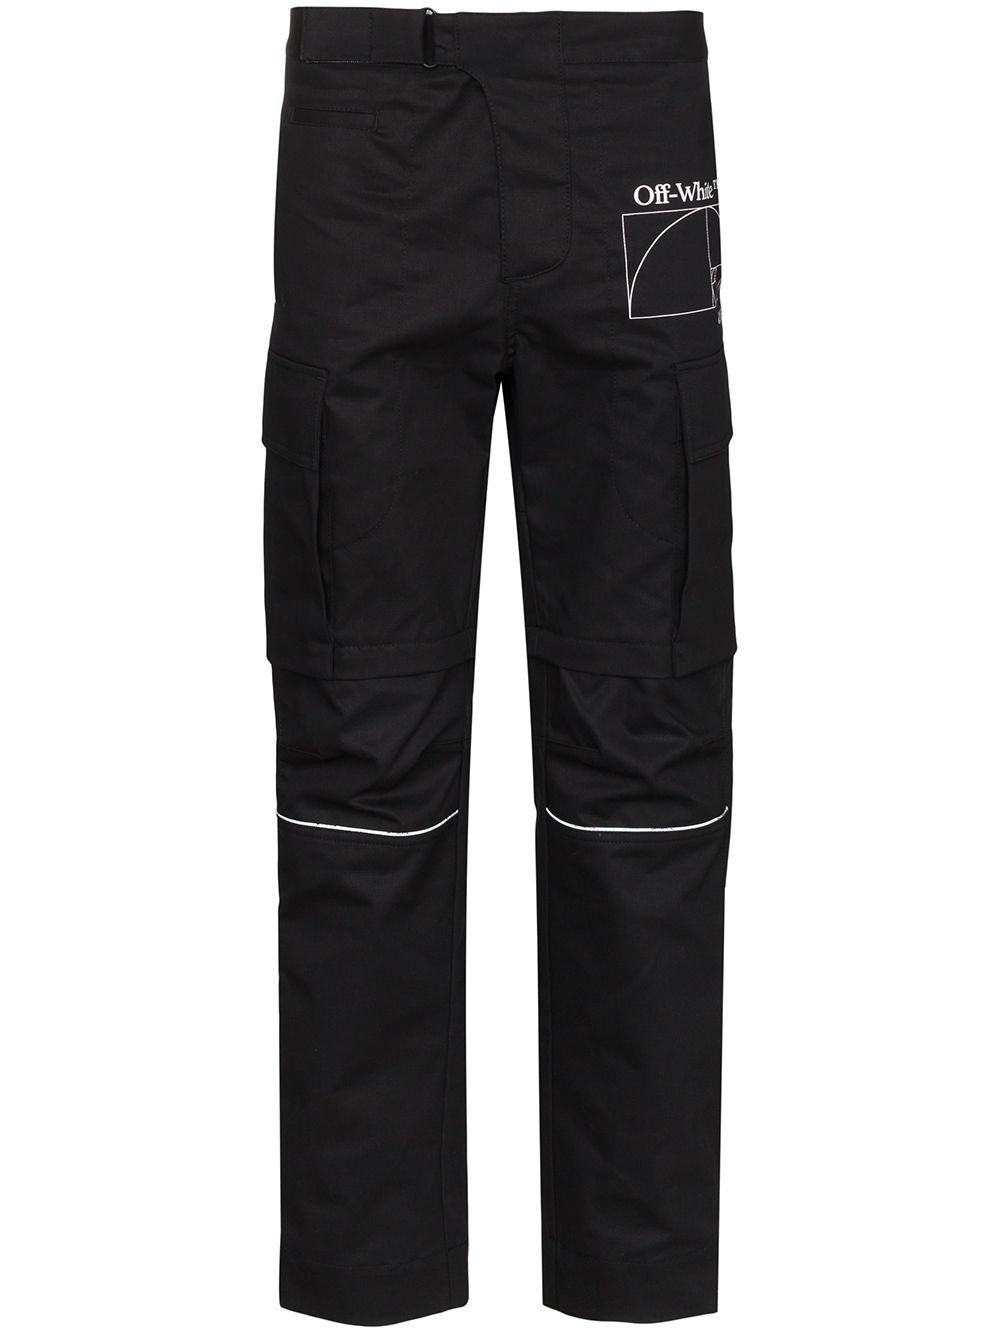 фото Off-white спортивные брюки с карманами карго